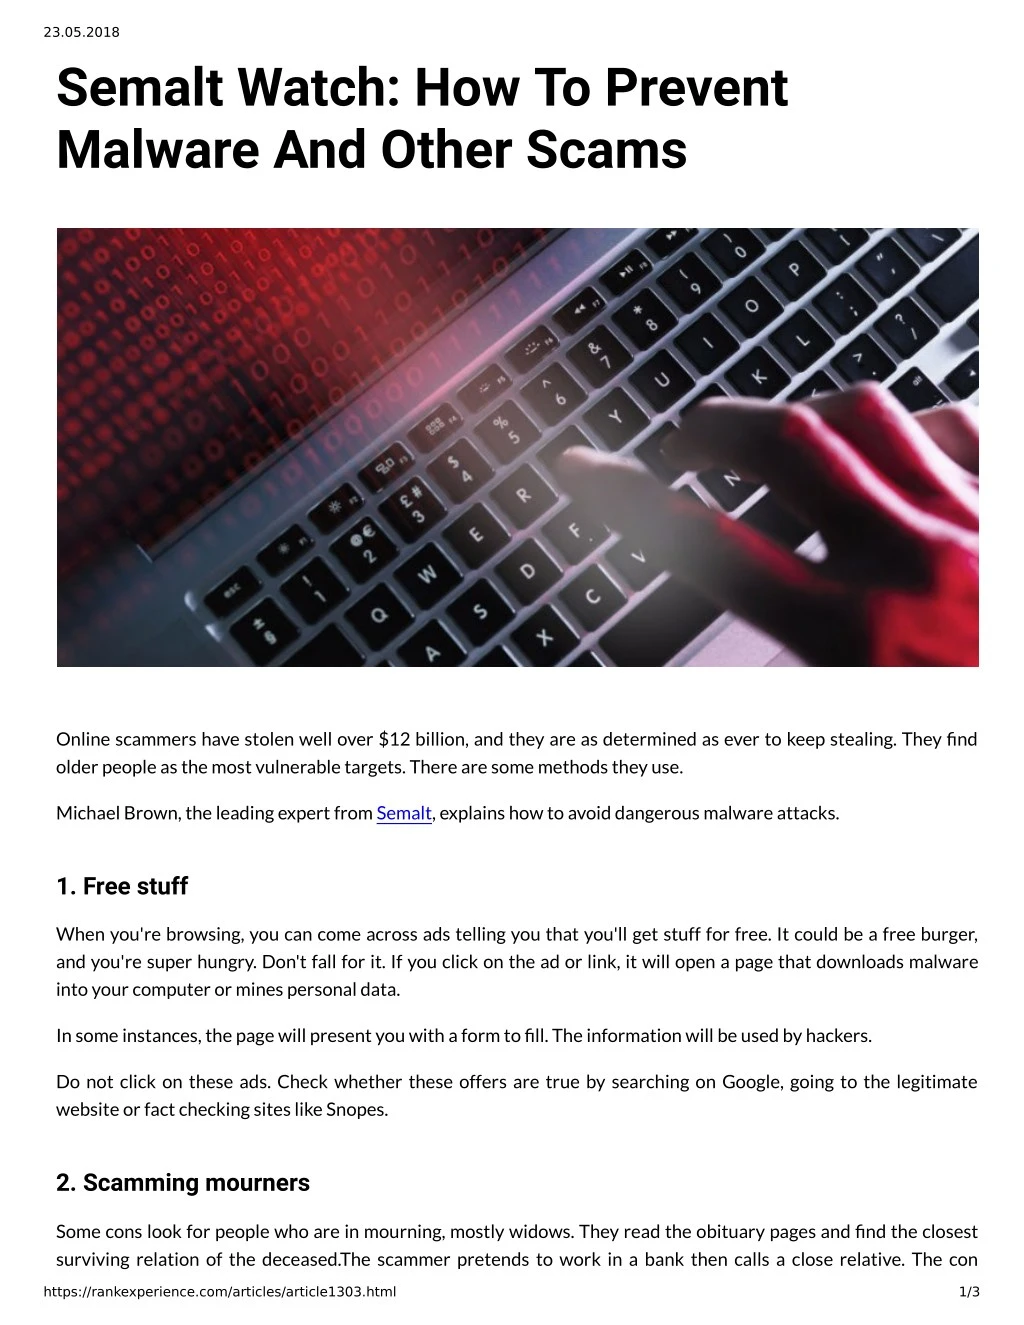 23 05 2018 semalt watch how to prevent malware